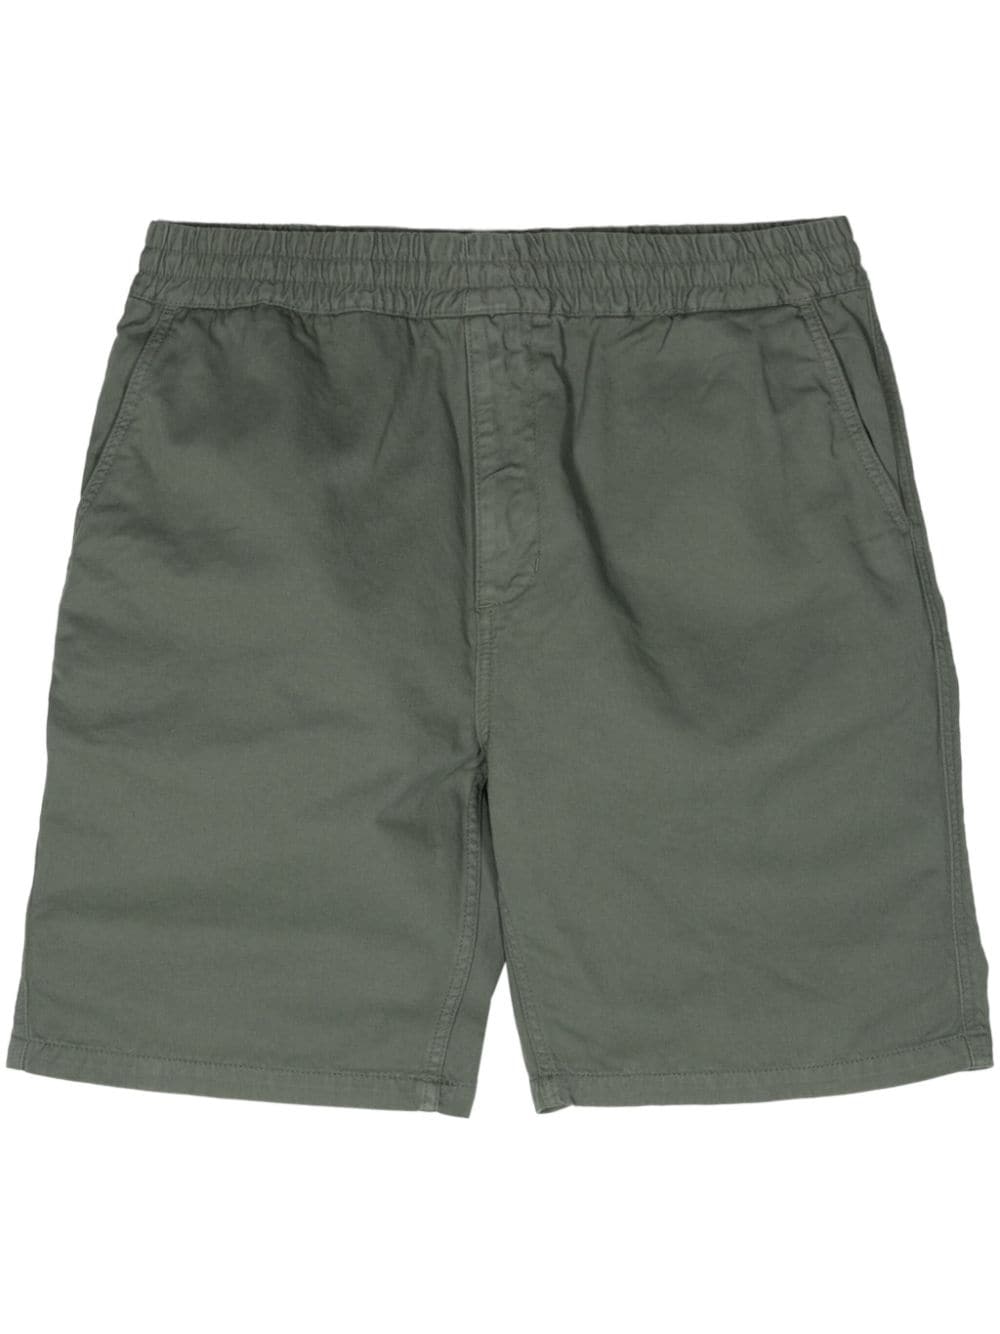 Carhartt WIP Flint organic cotton shorts - Green von Carhartt WIP